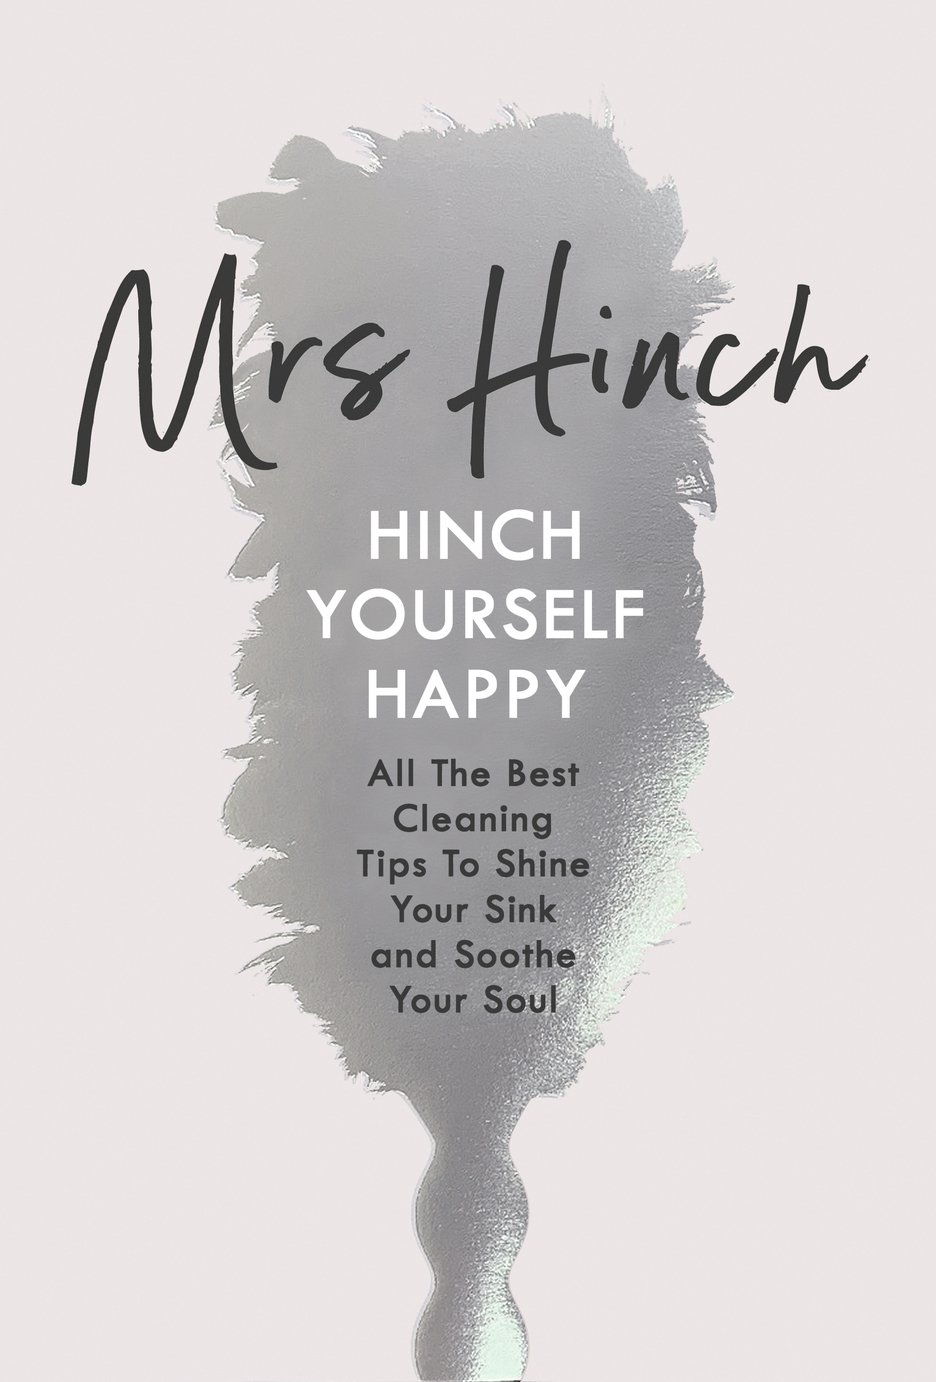 Mrs Hinch - Hinch Yourself Happy